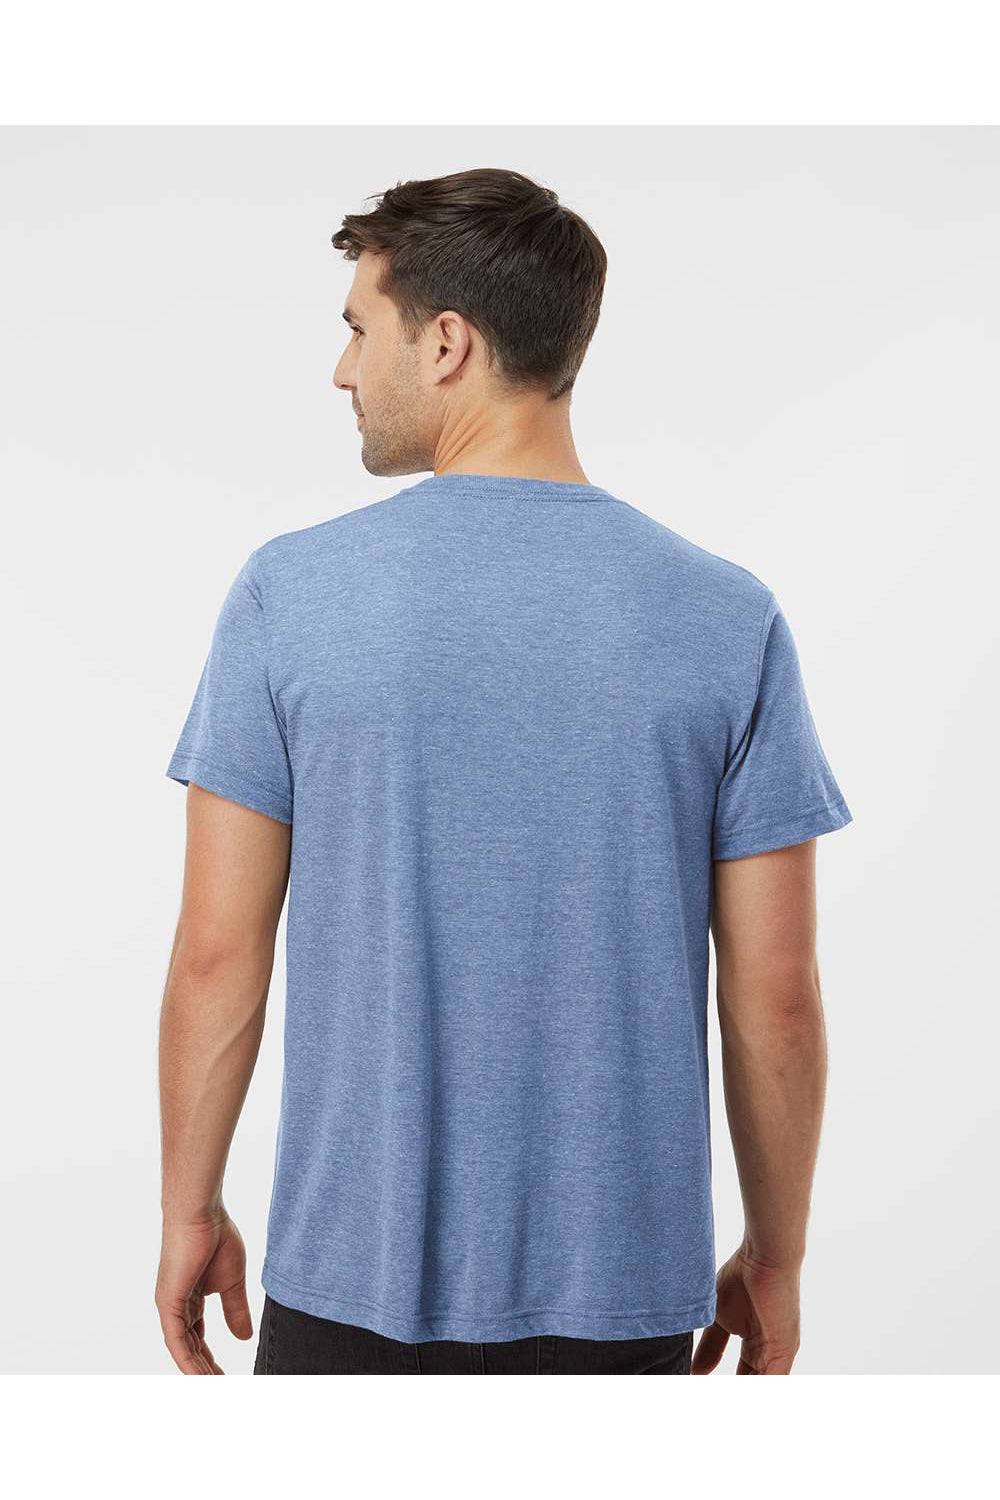 Tultex 254 Mens Short Sleeve Crewneck T-Shirt Athletic Blue Model Back